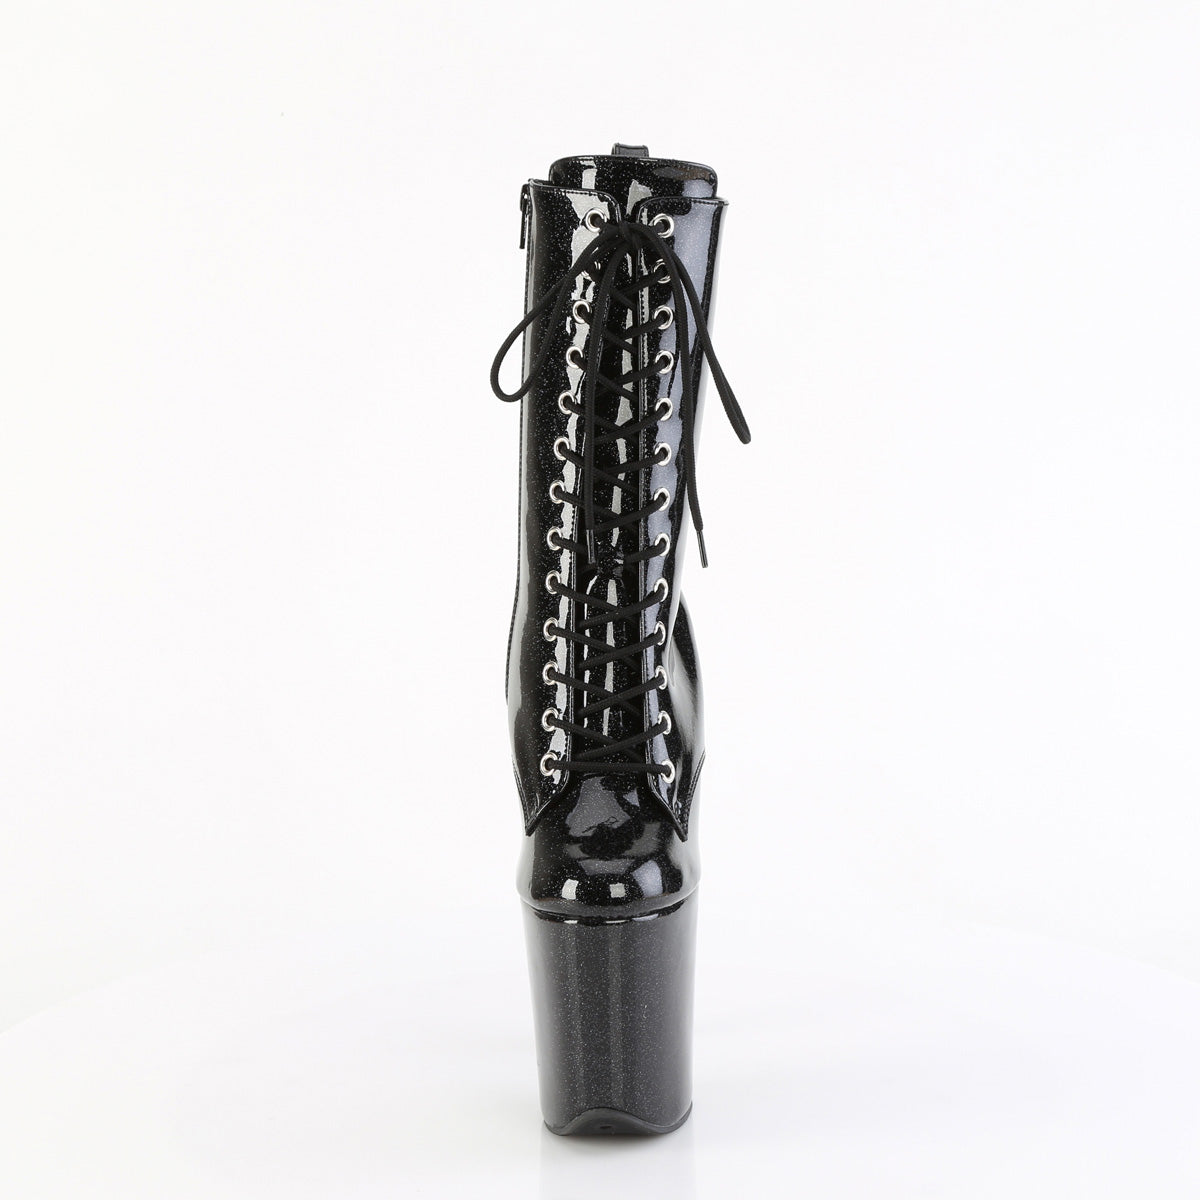 FLAMINGO-1040GP Pleaser 8 Inch Heel Black Glitter Ankle Boots Exotic Dancing